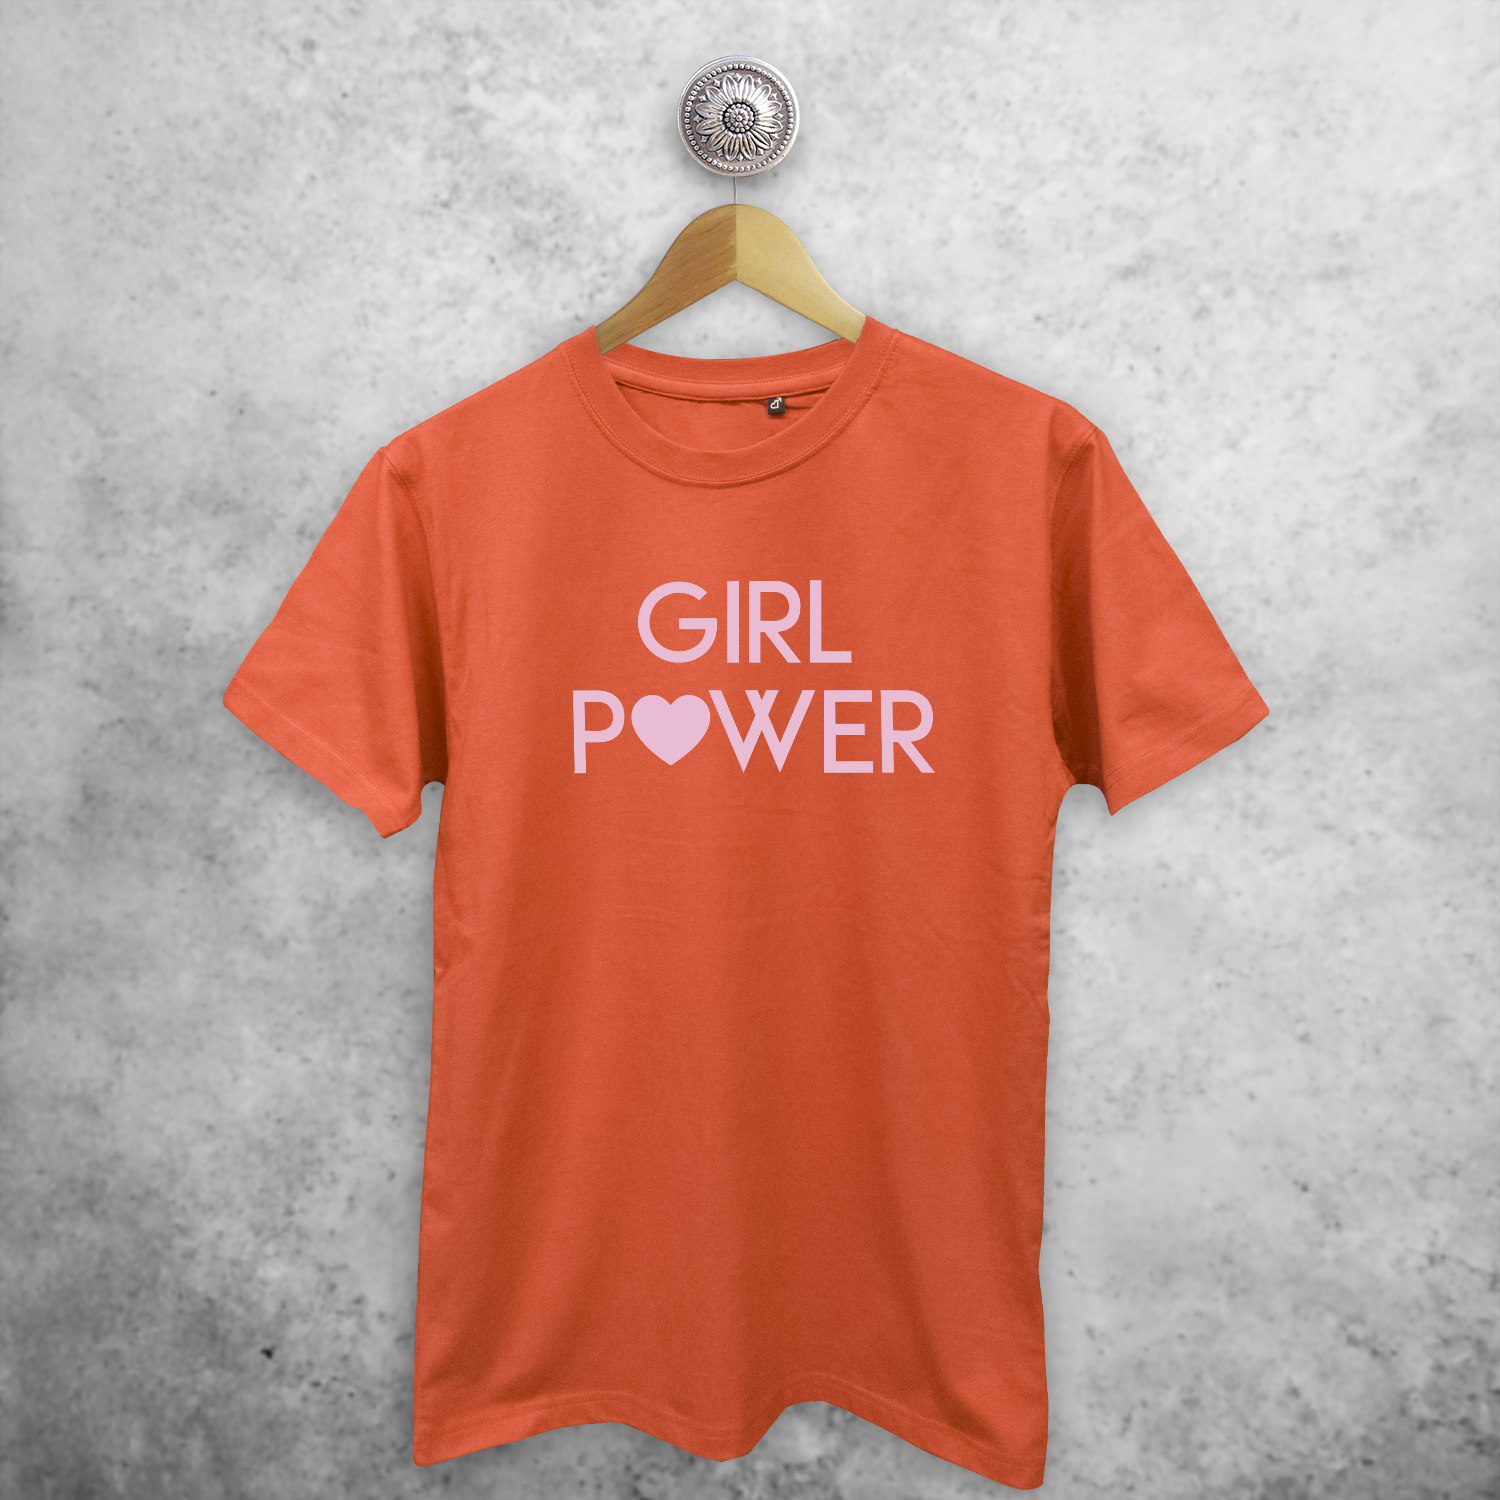 Girl power'volwassene shirt